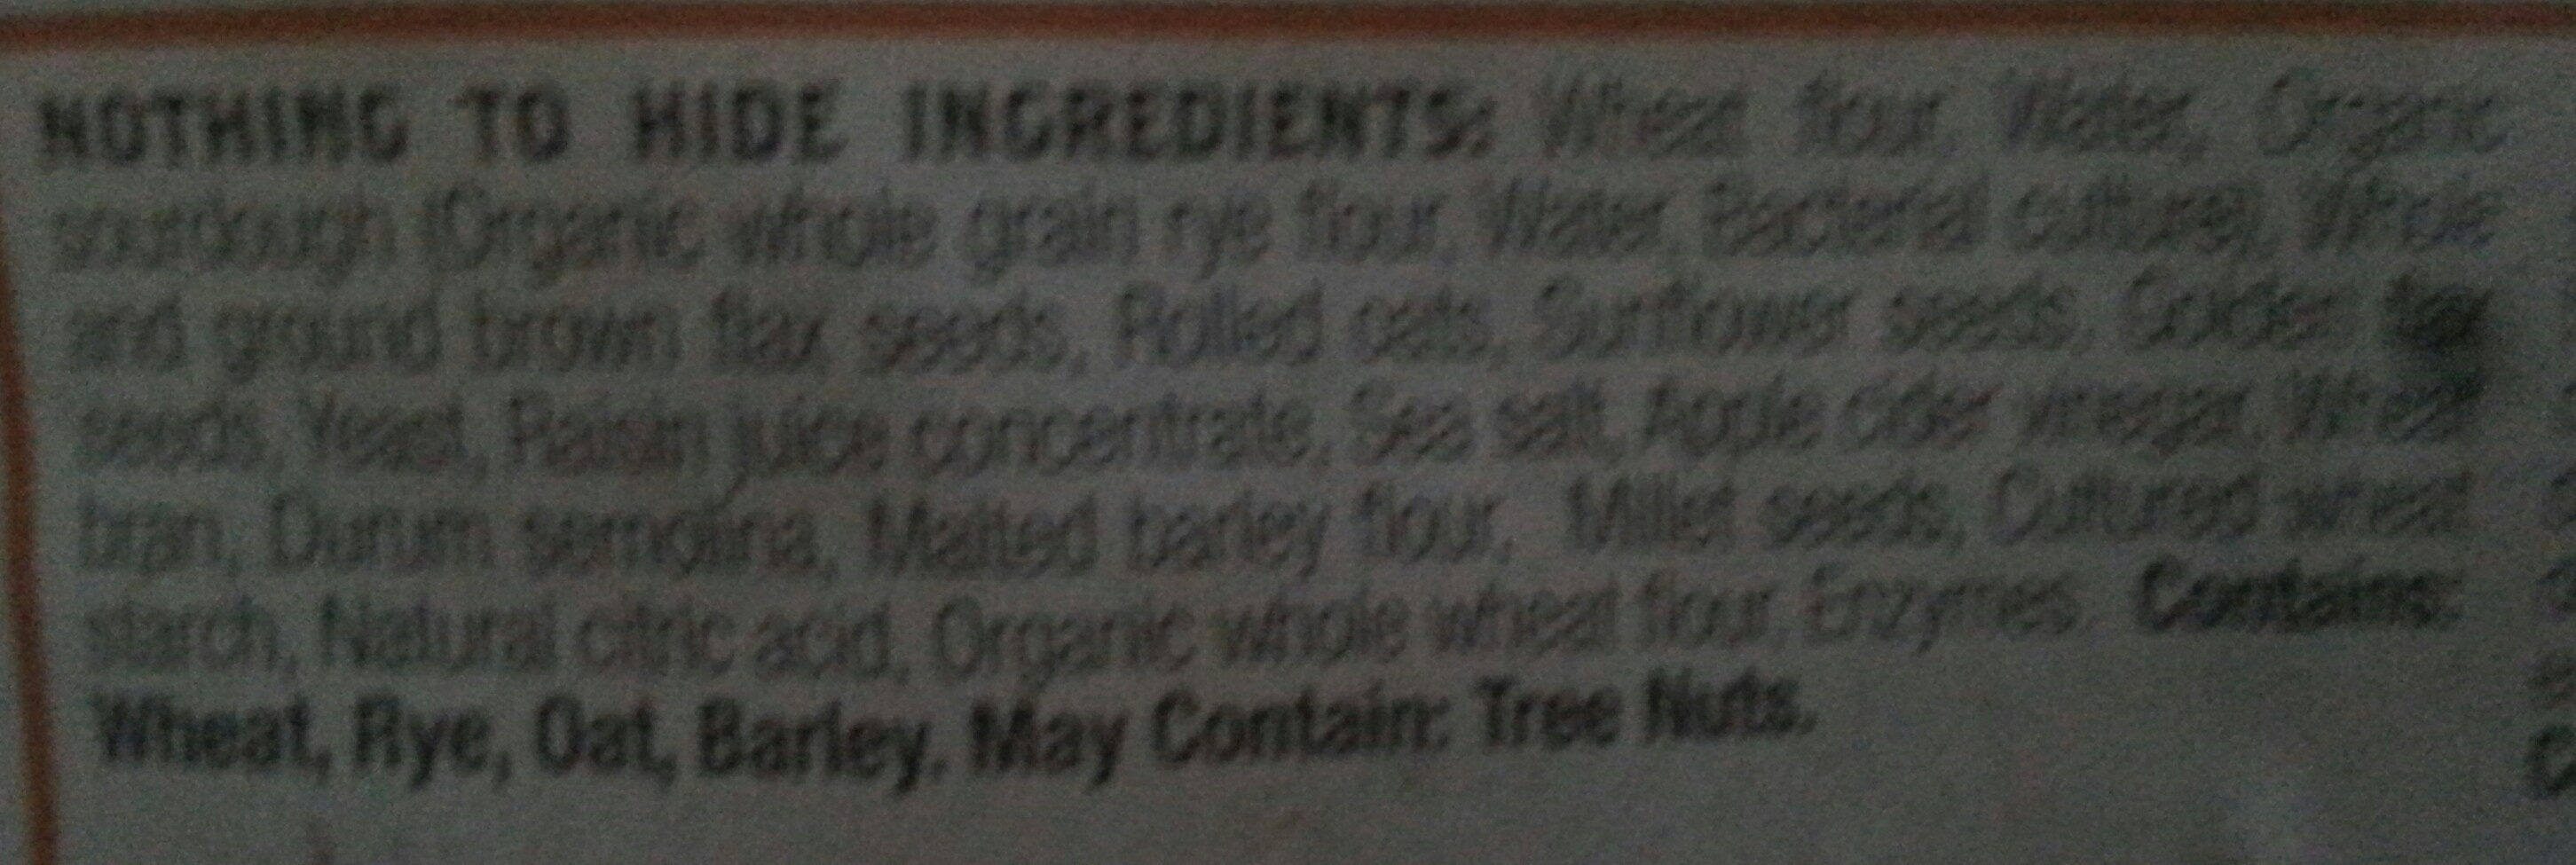 Stonemill- Authentic Sourdough rye - Ingredients